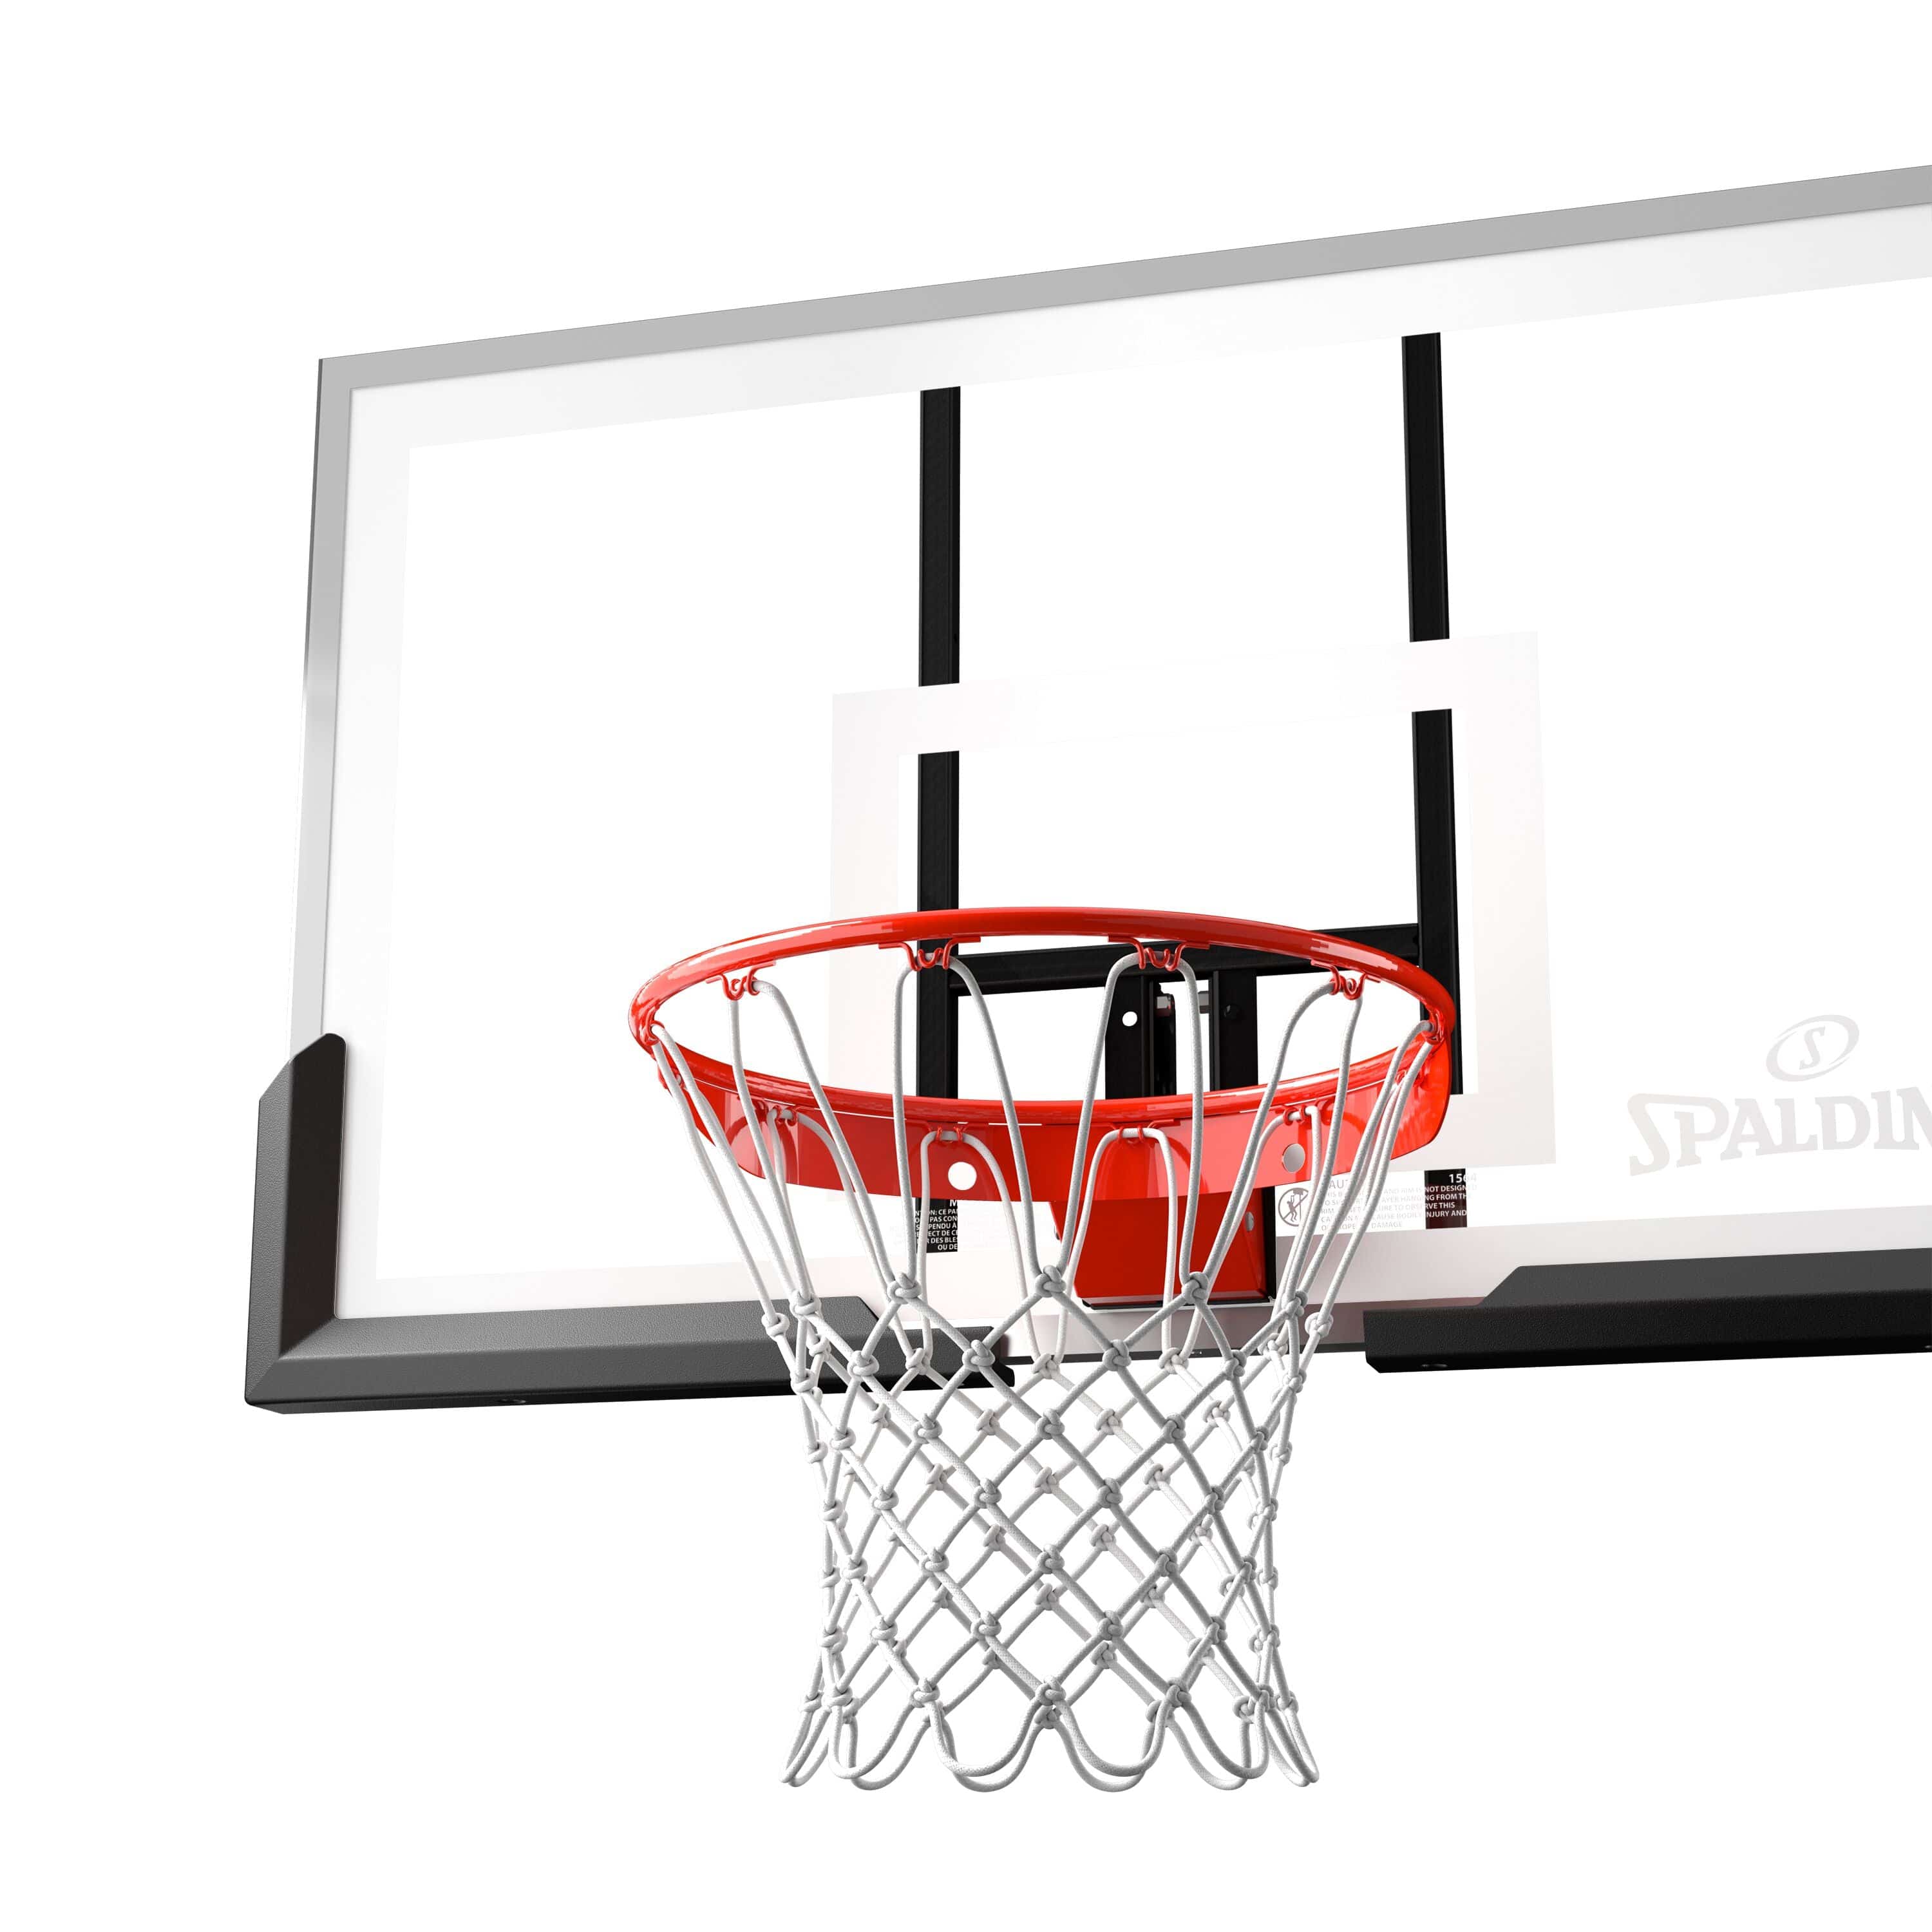 Shop Spalding Arena Slam Basketball Rim